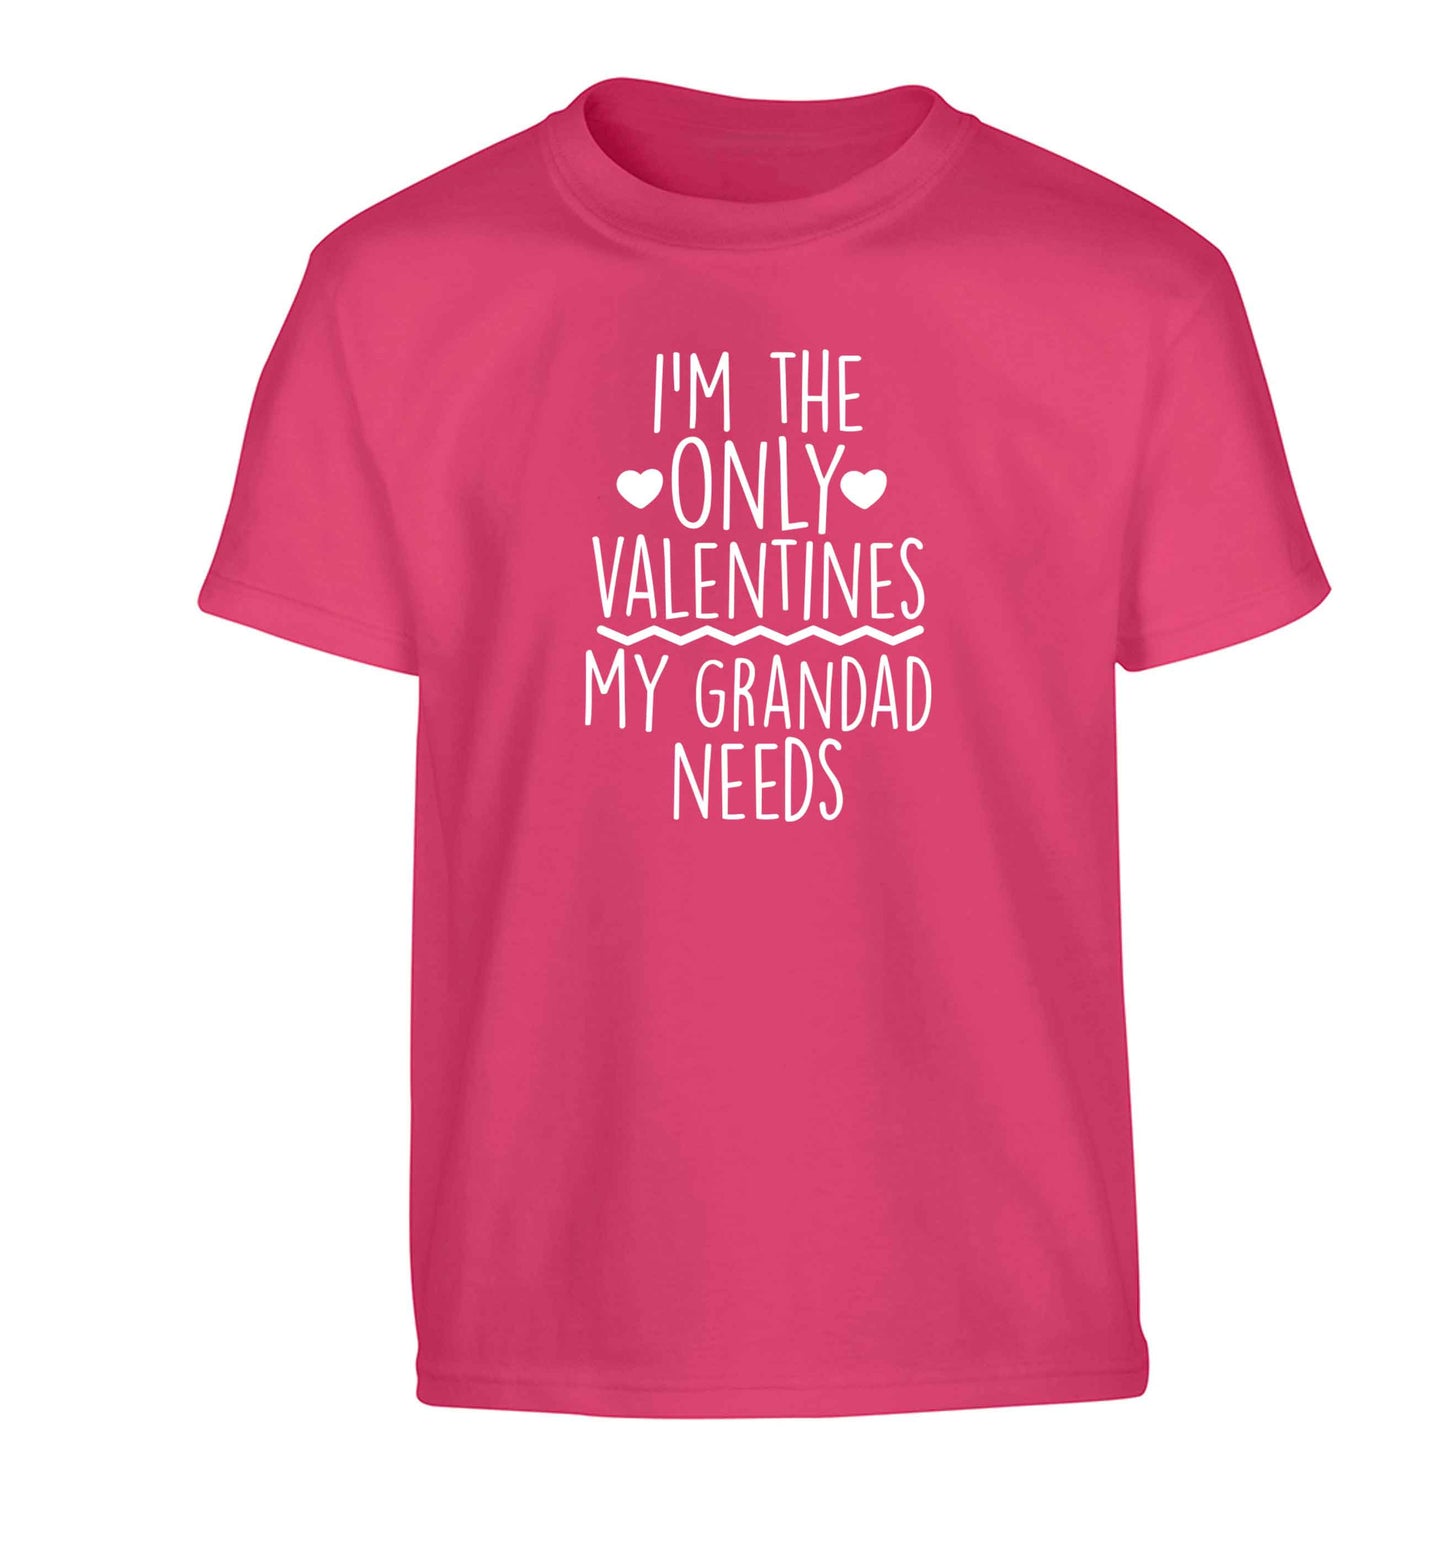 I'm the only valentines my grandad needs Children's pink Tshirt 12-13 Years